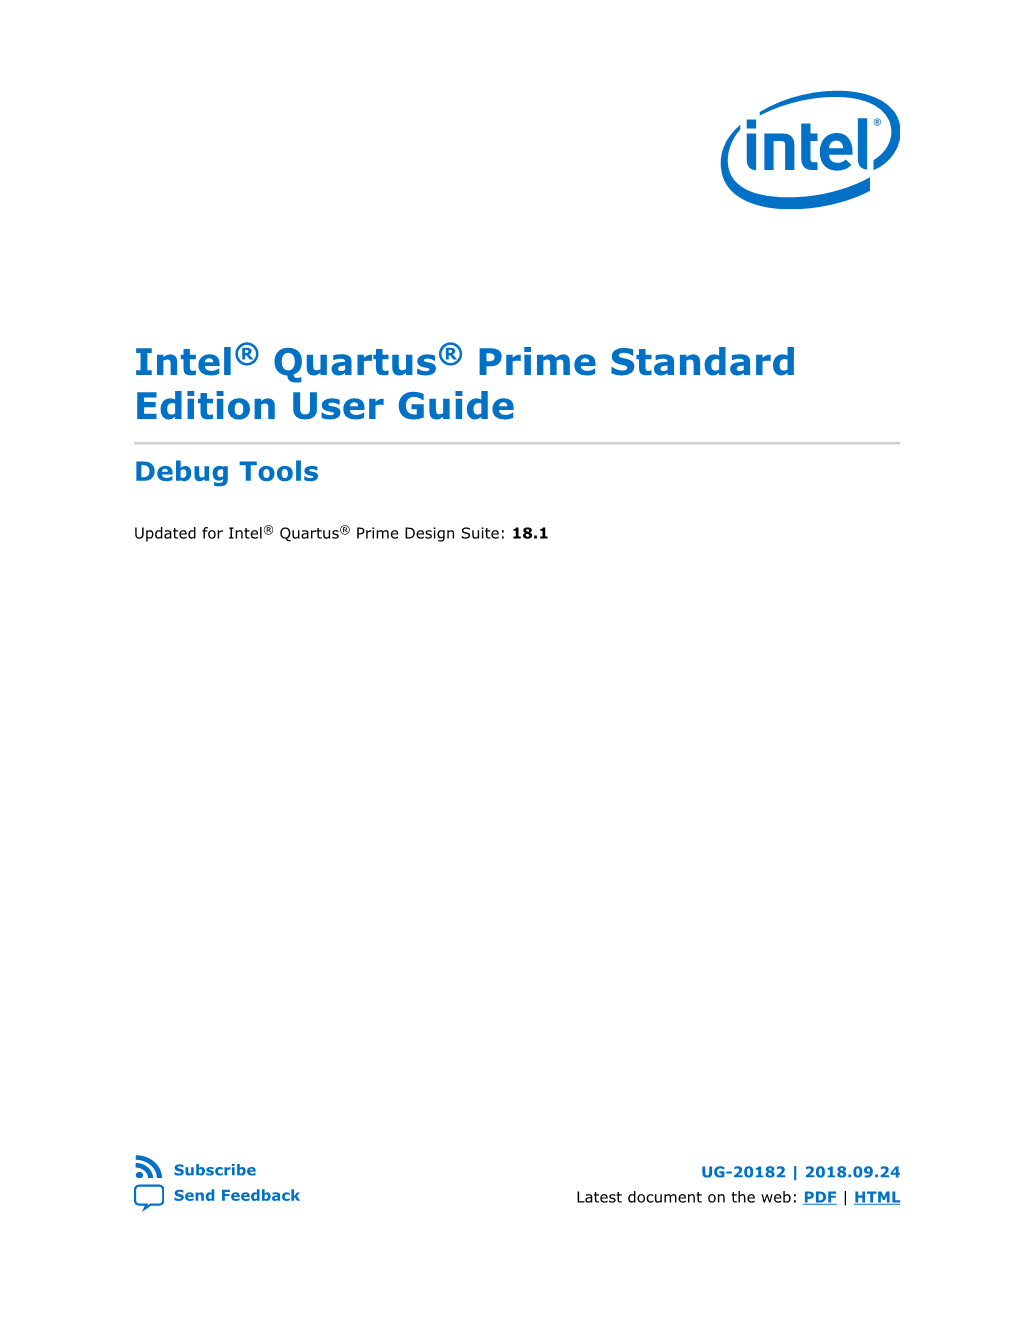 Intel® Quartus® Prime Standard Edition User Guide Debug Tools